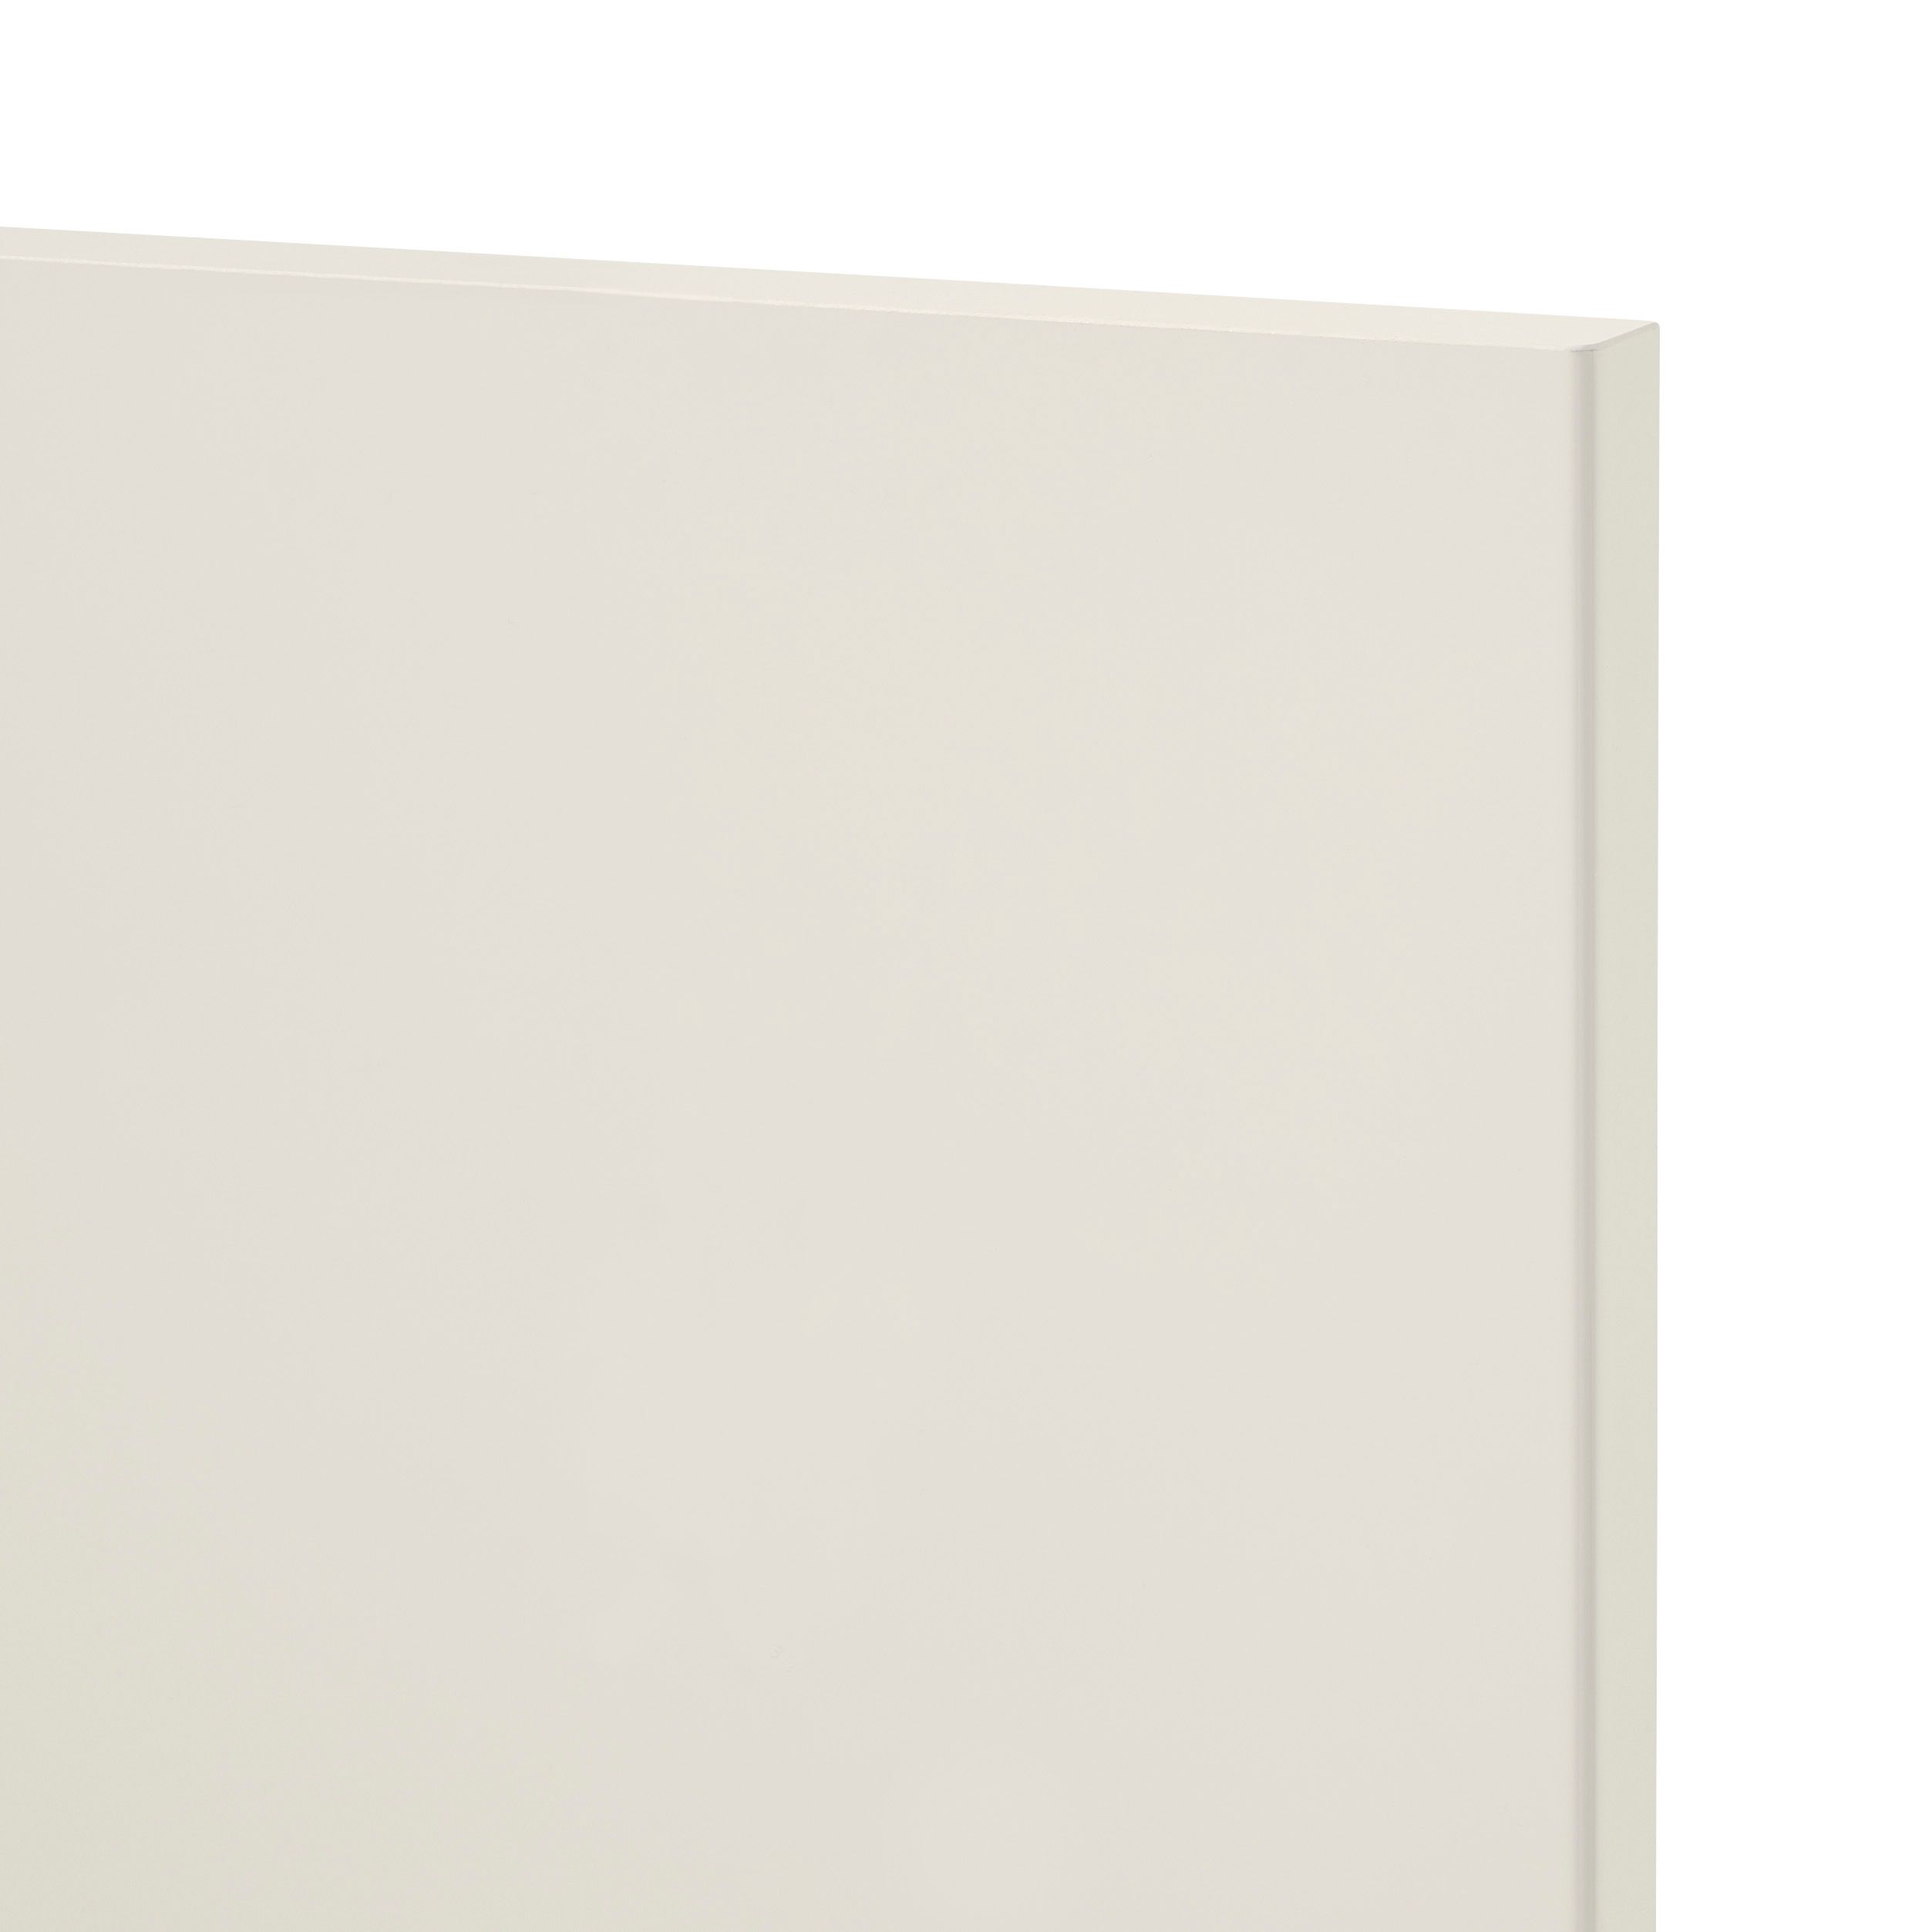 GoodHome Stevia Gloss cream slab Appliance Cabinet door (W)600mm (H)687mm (T)18mm